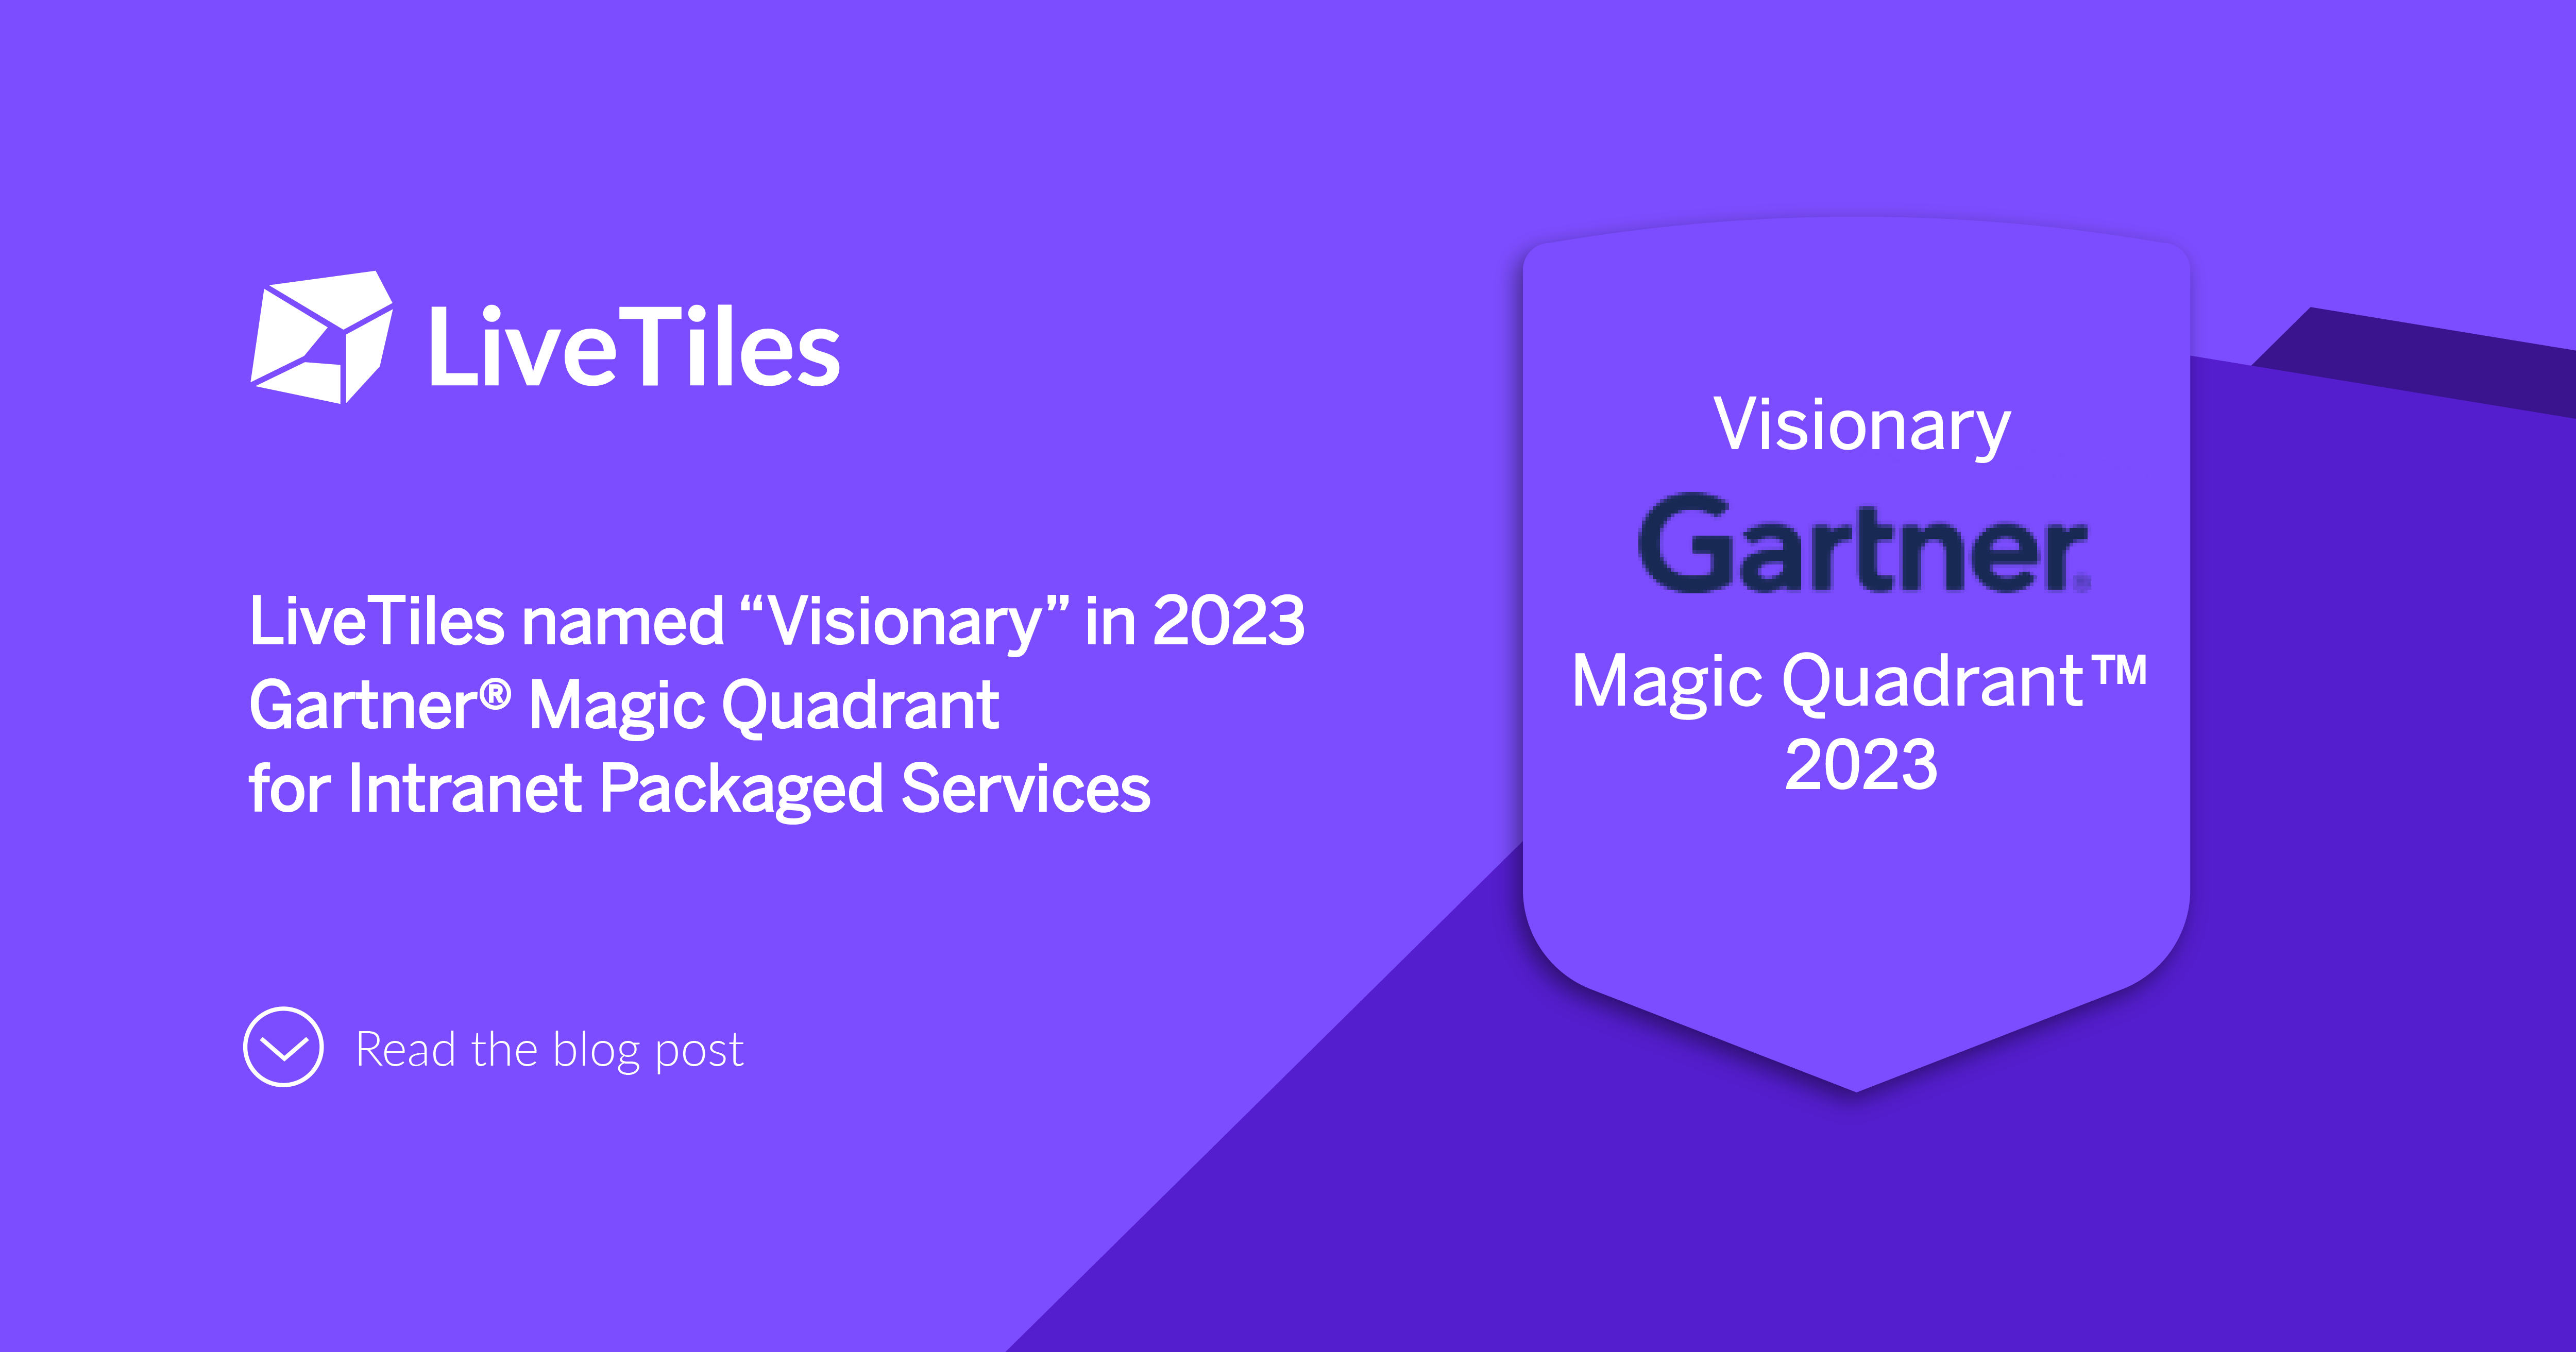 LiveTiles named “Visionary” in 2023 Gartner® Magic Quadrant for Intranet Packaged Services